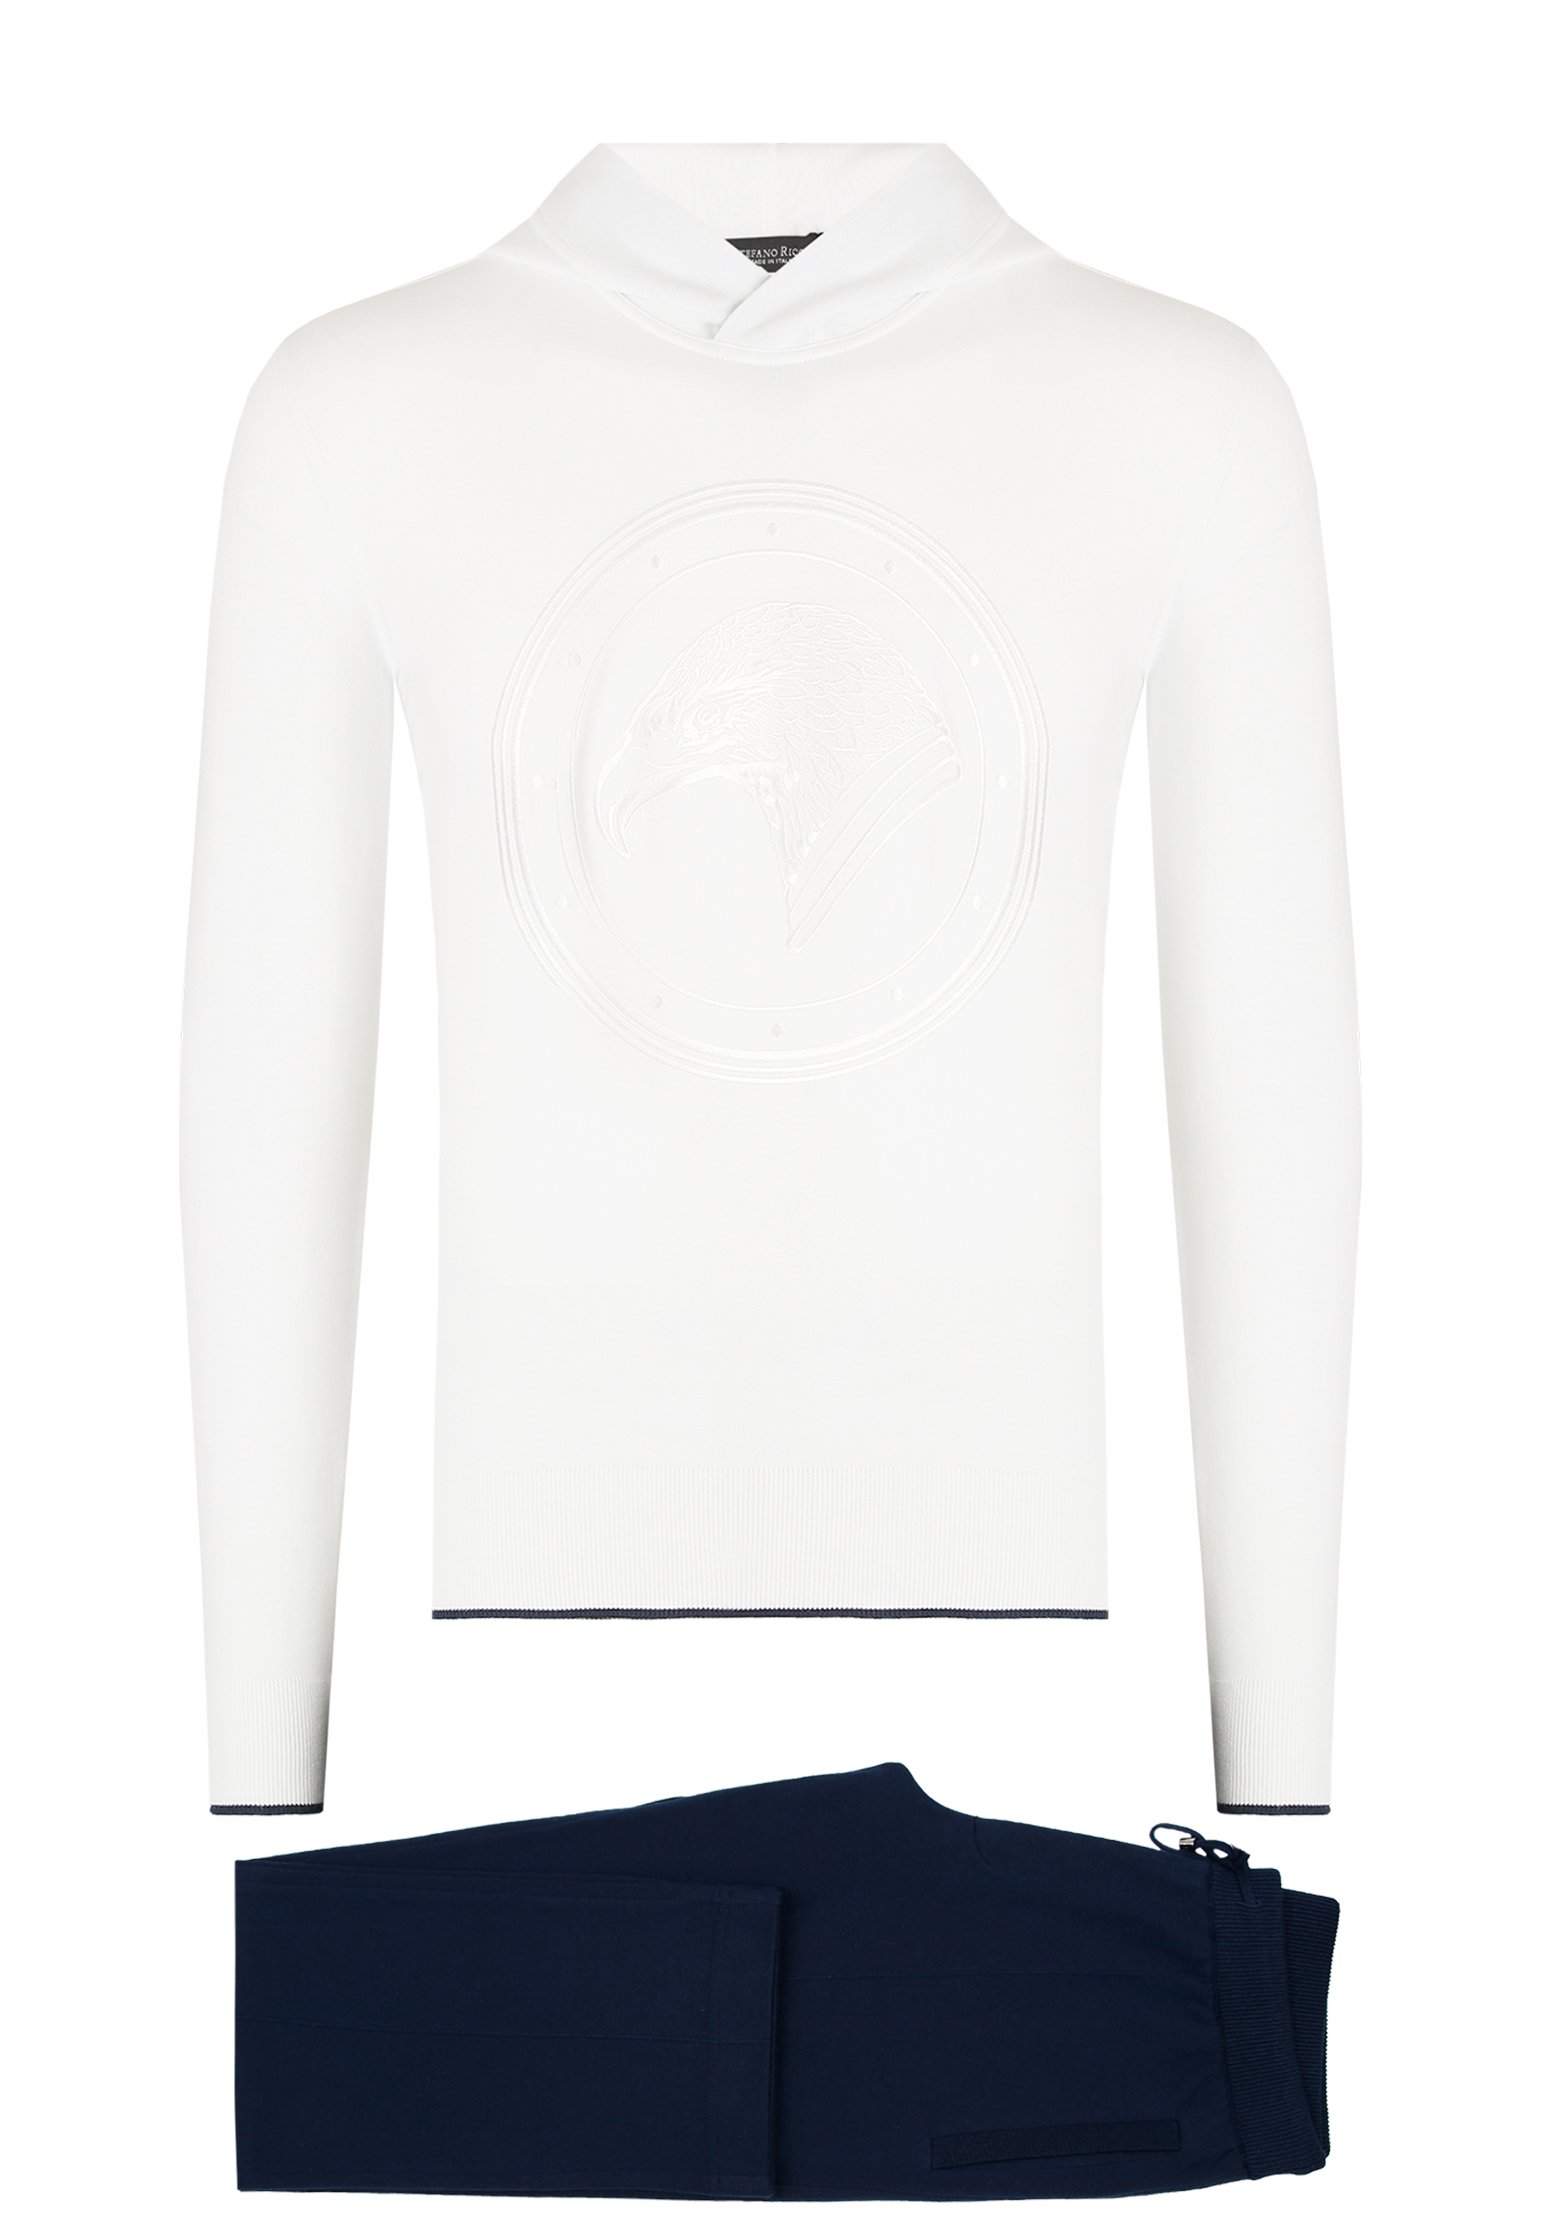 Jogging suit STEFANO RICCI Color: white (Code: 322) in online store Allure